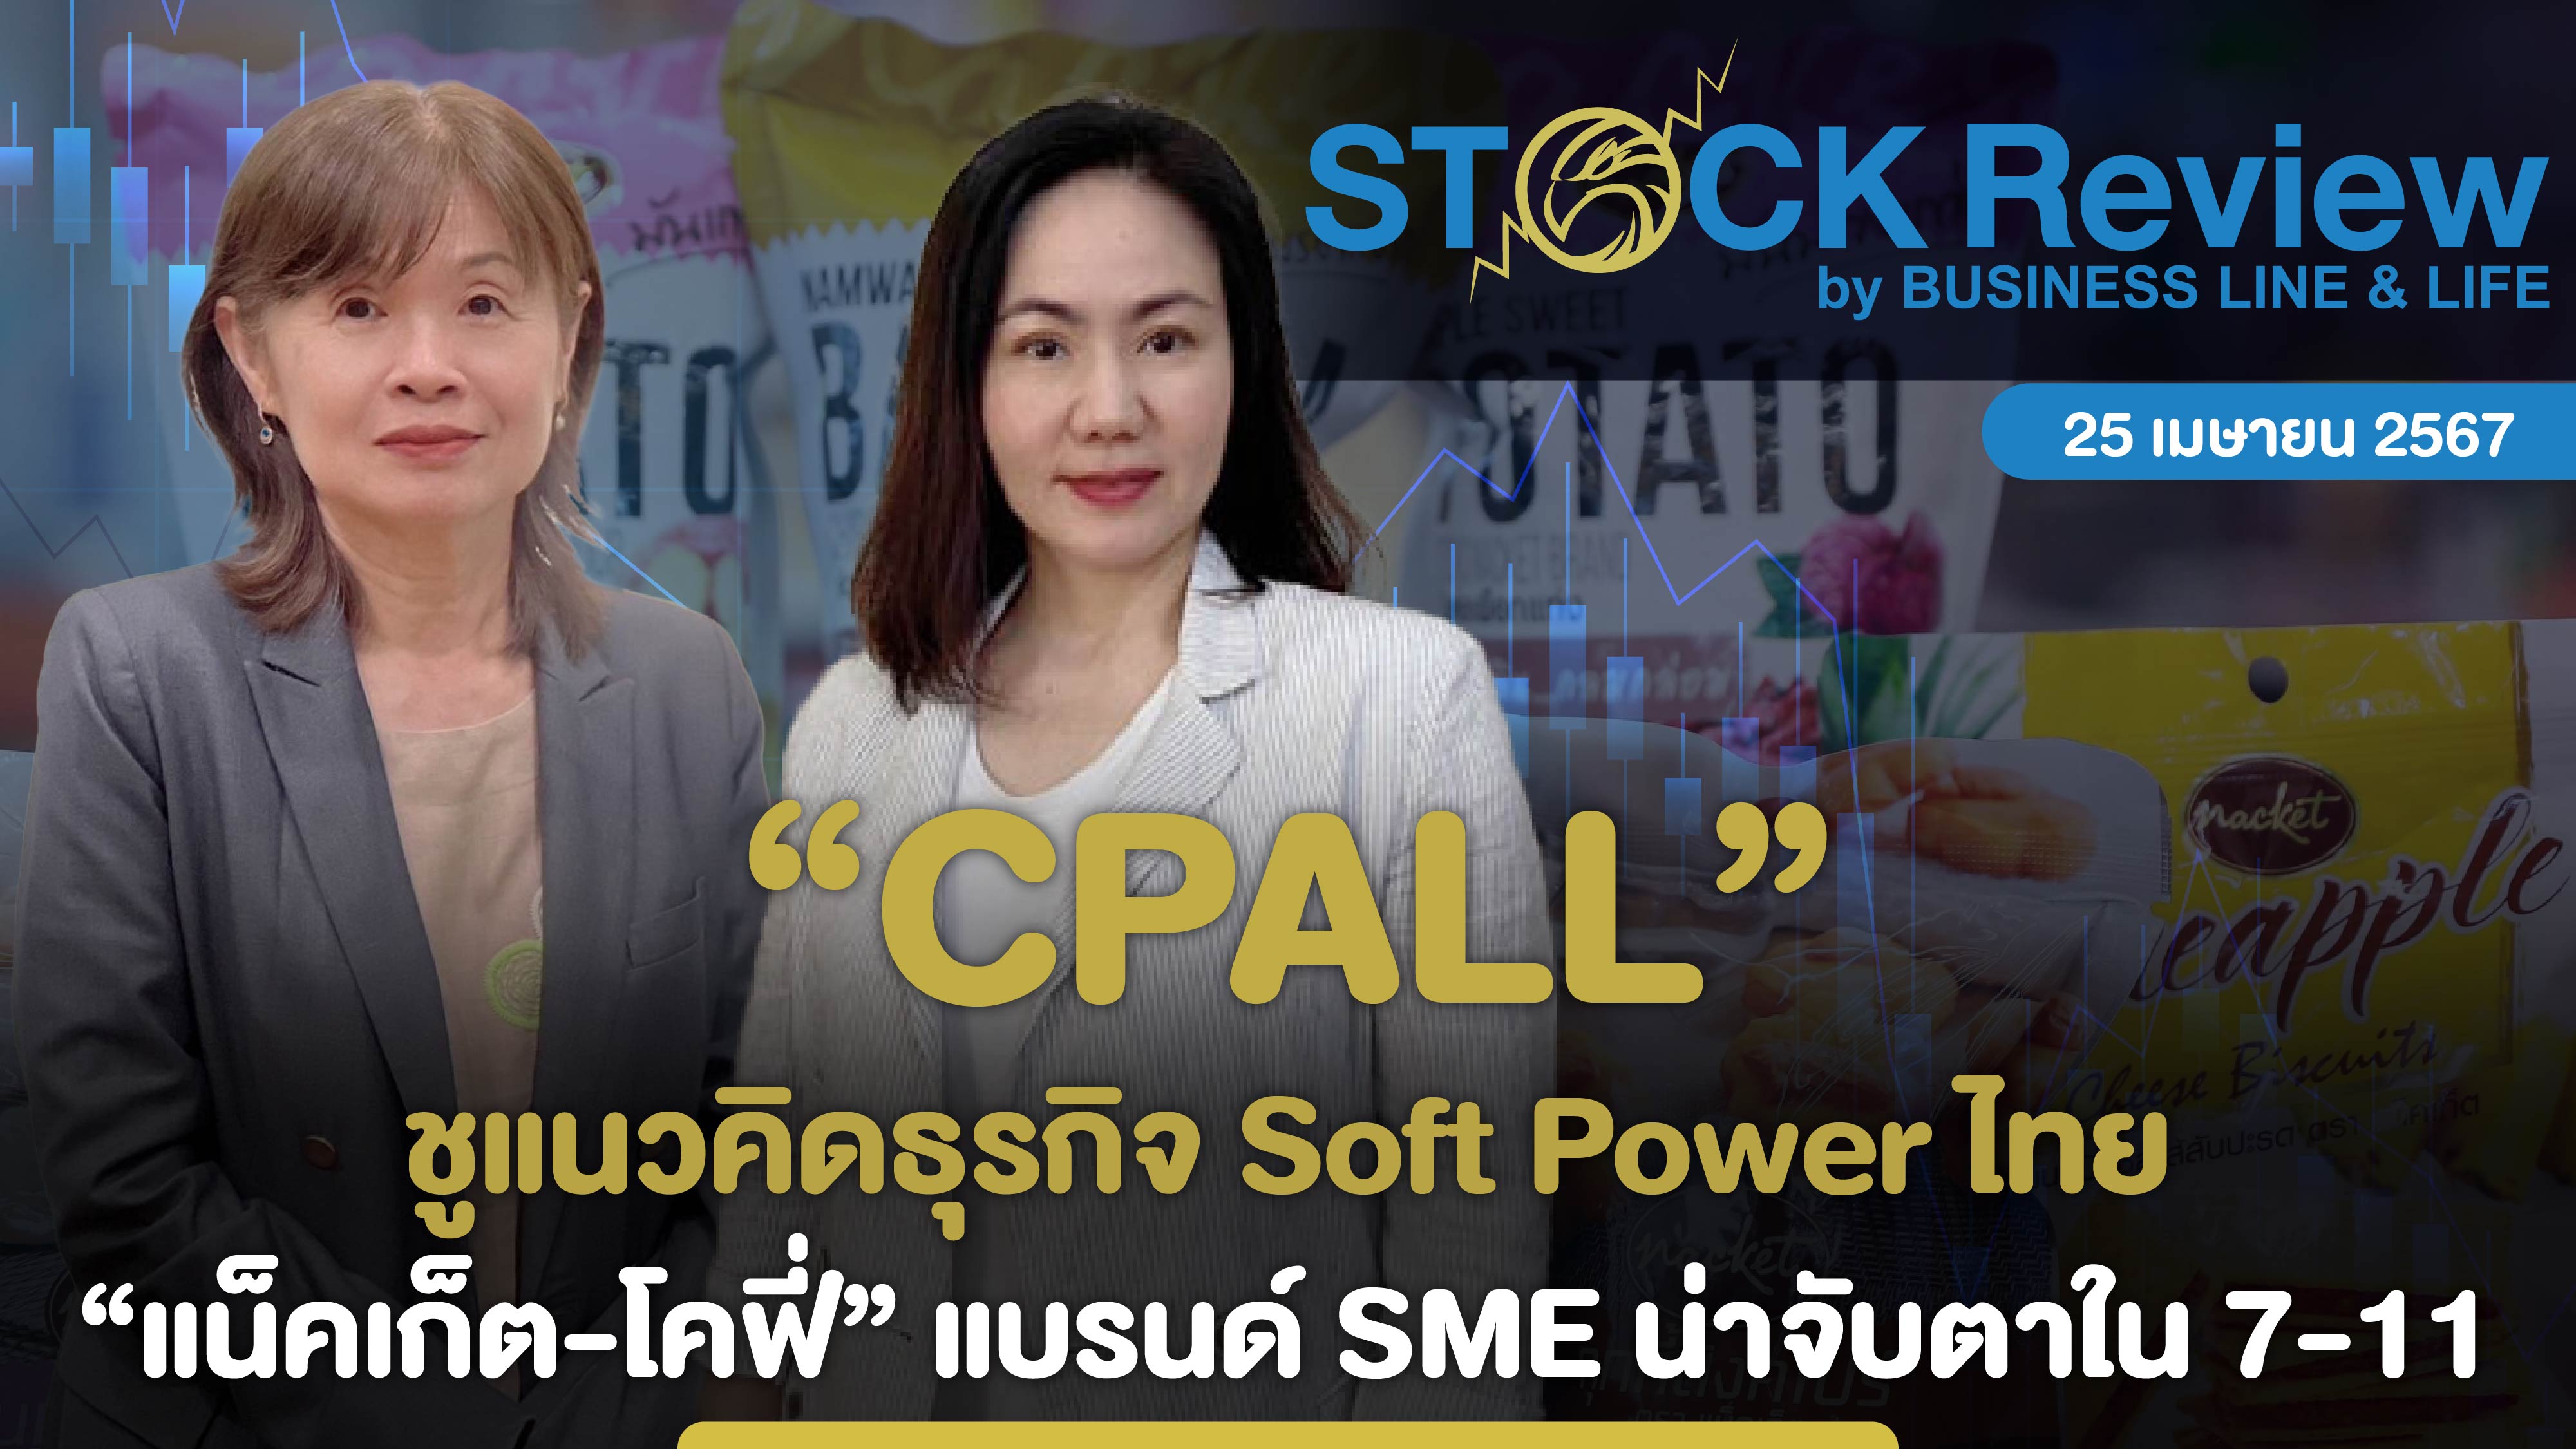 CPALL ชูแนวคิดธุรกิจ Soft Power ไทย “แน็คเก็ต-โคฟี่” แบรนด์ SME น่าจับตาในร้านเซเว่นฯ